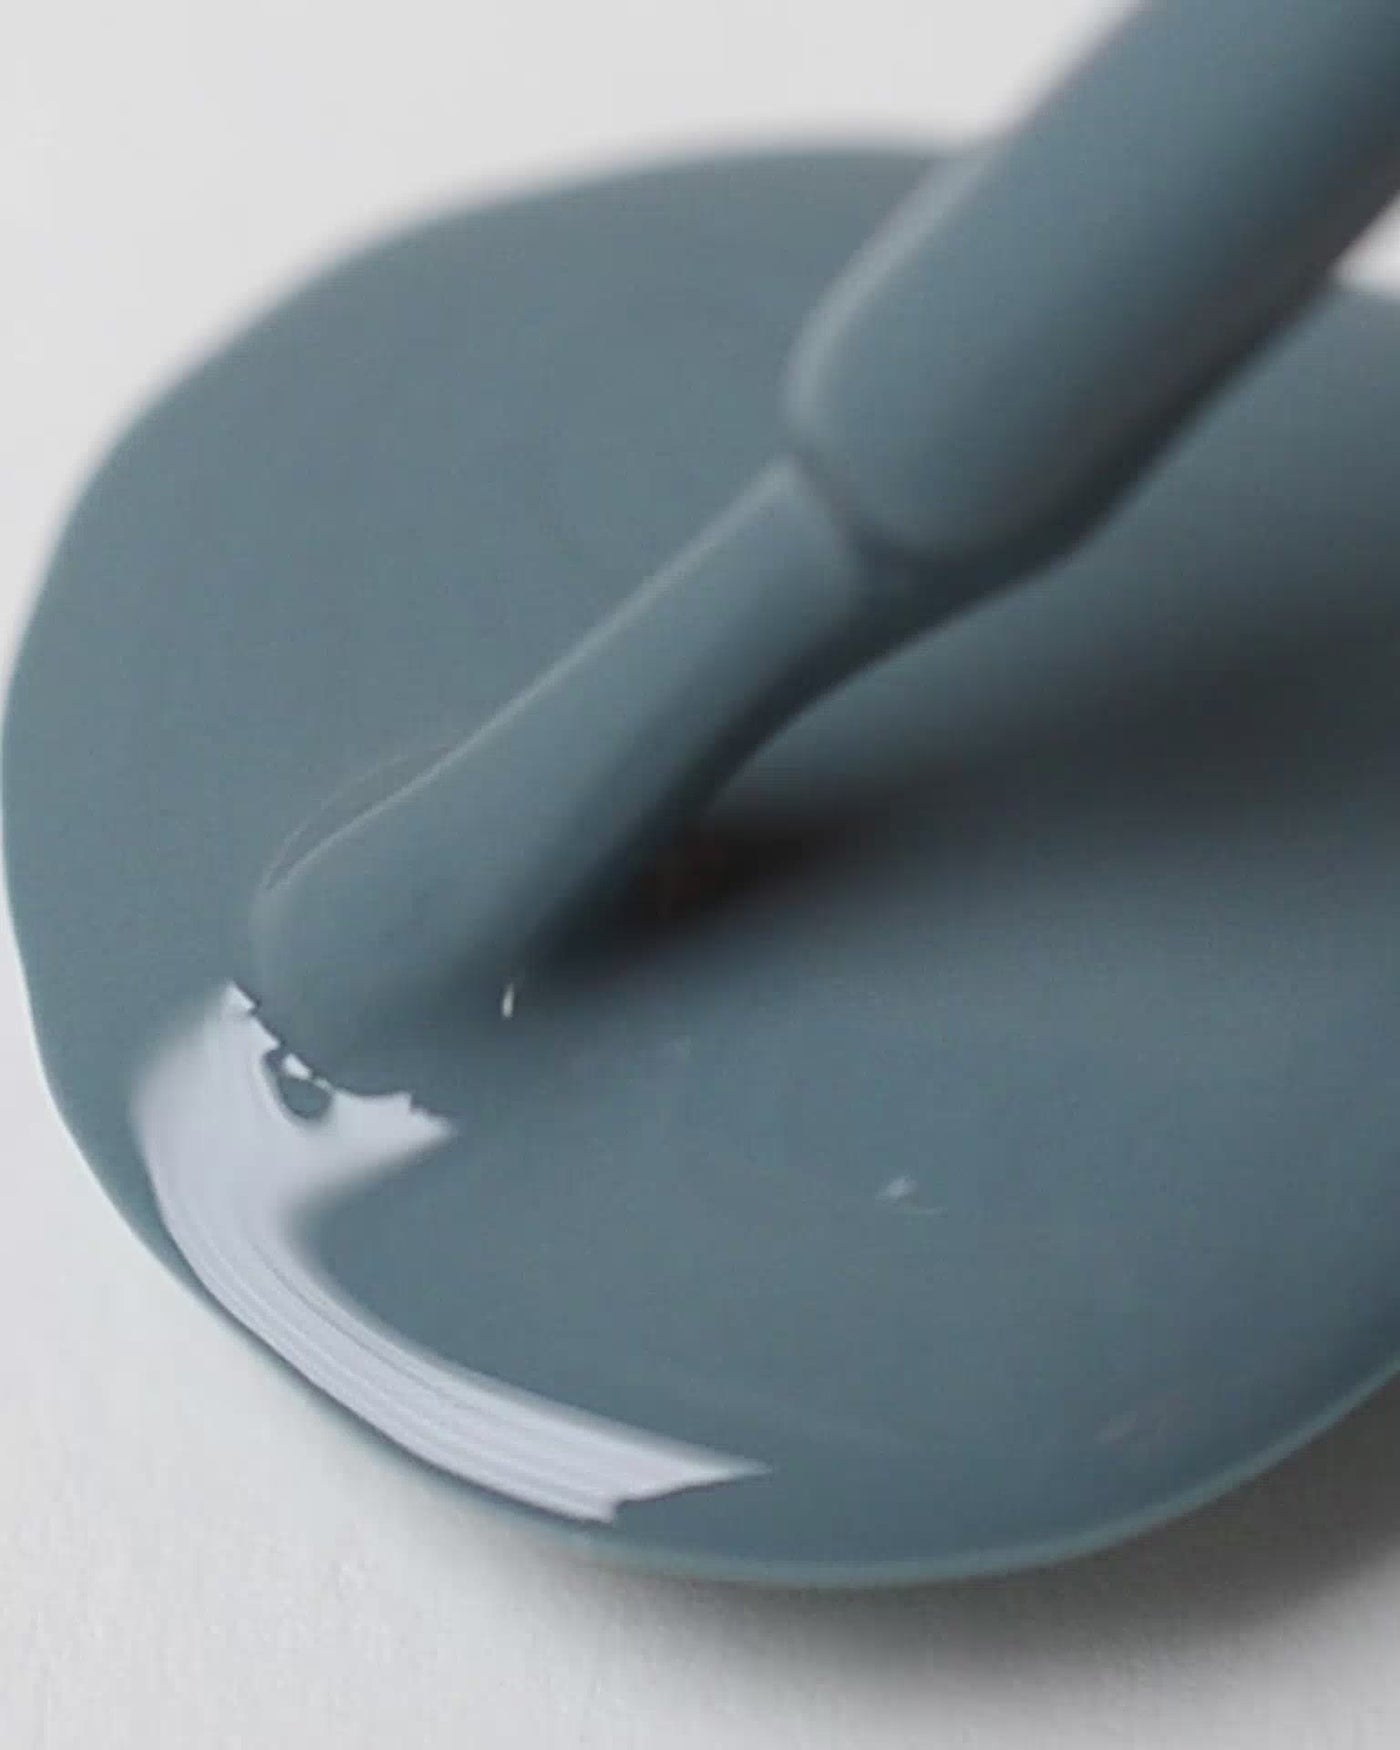 Mid grey-blue nail polish drop by sienna